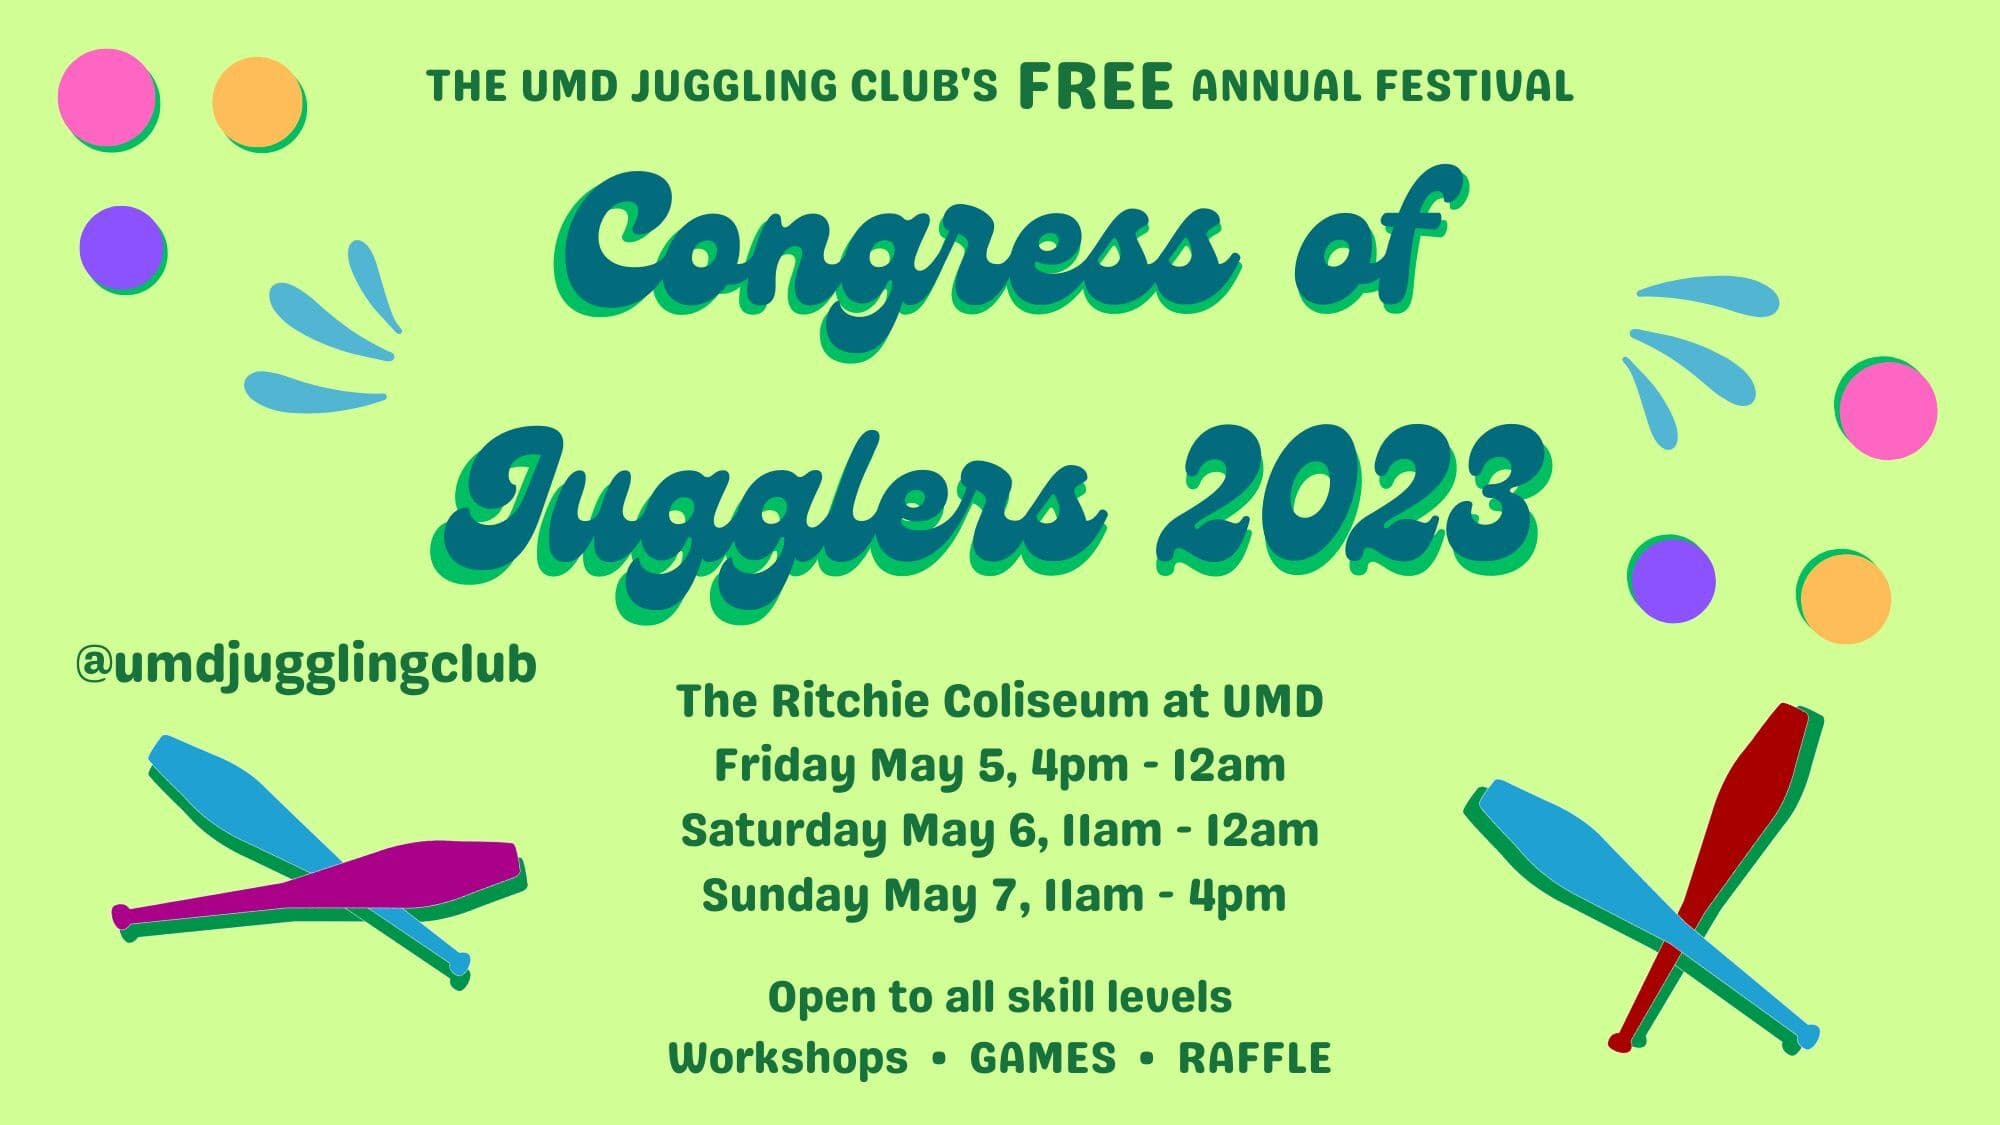 Congress of Jugglers 2023